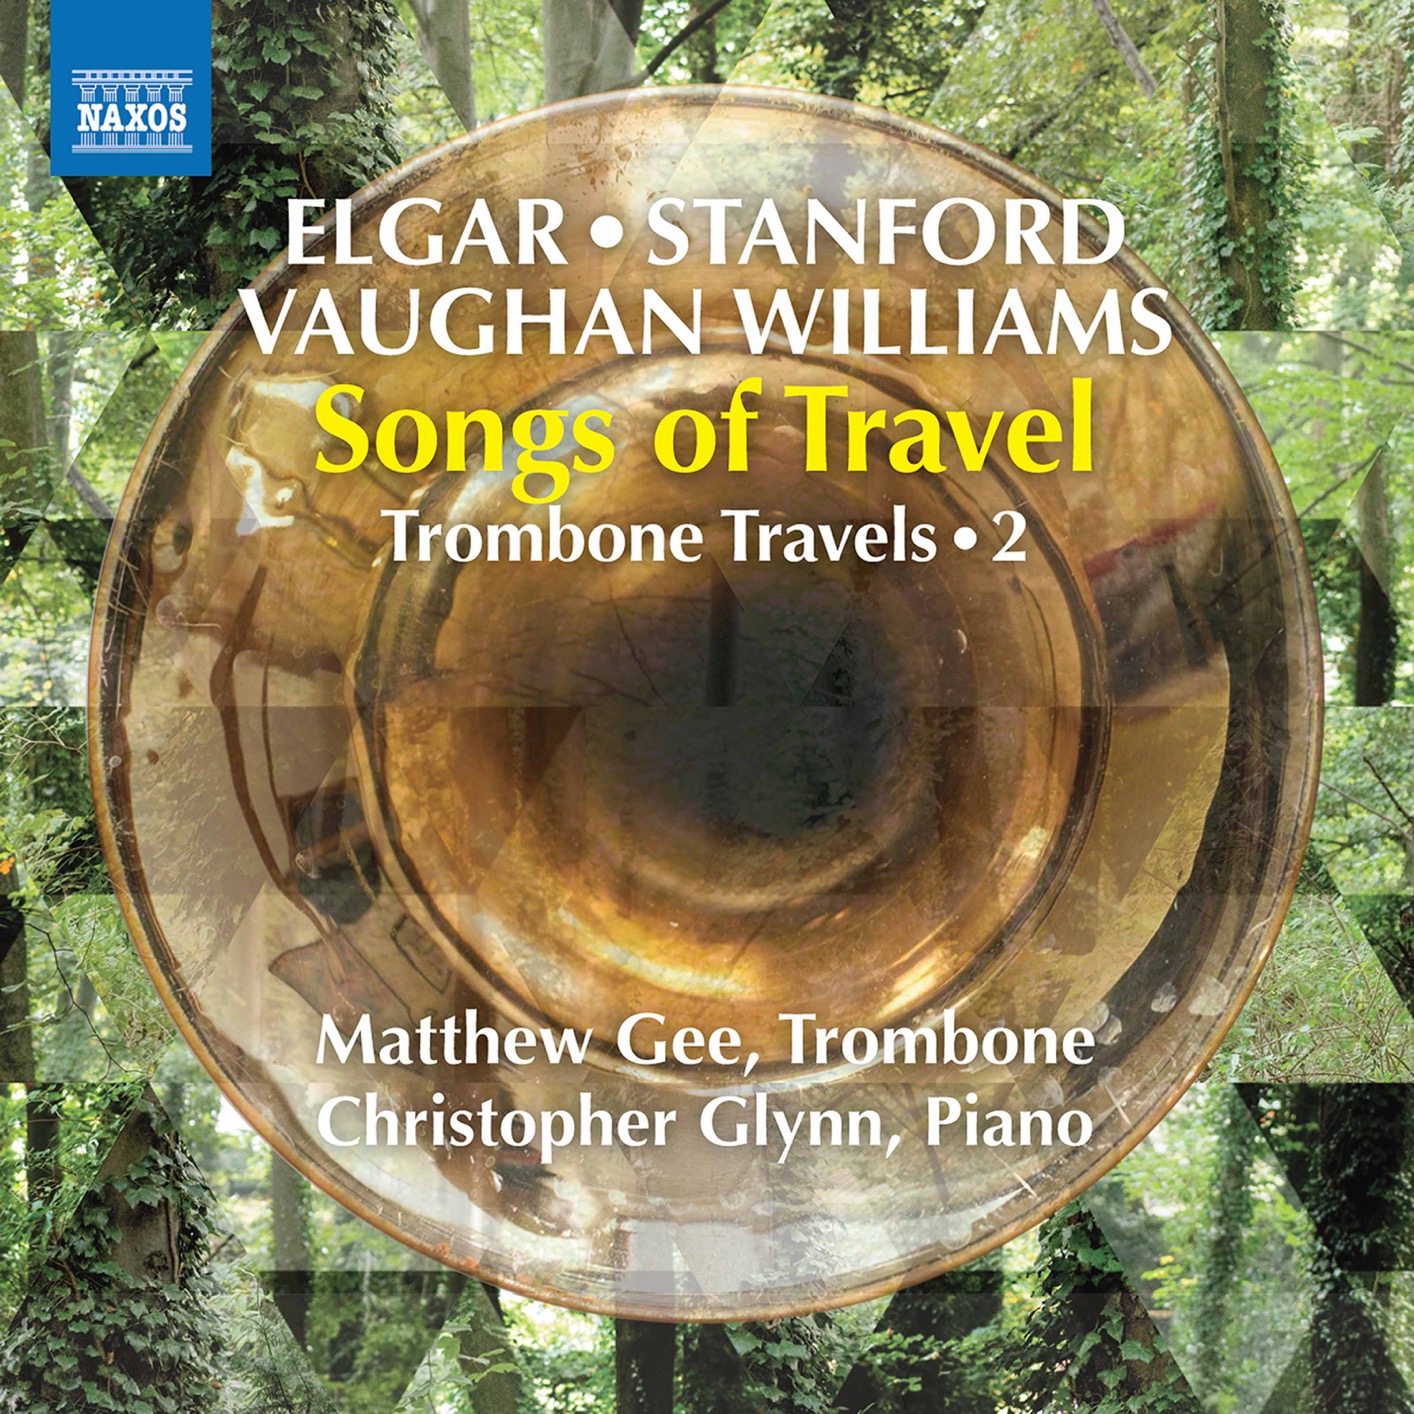 Matthew Gee & Christopher Glynn - Trombone Travels, Vol. 2 Songs of Travel (2021) [FLAC 24bit/96kHz]